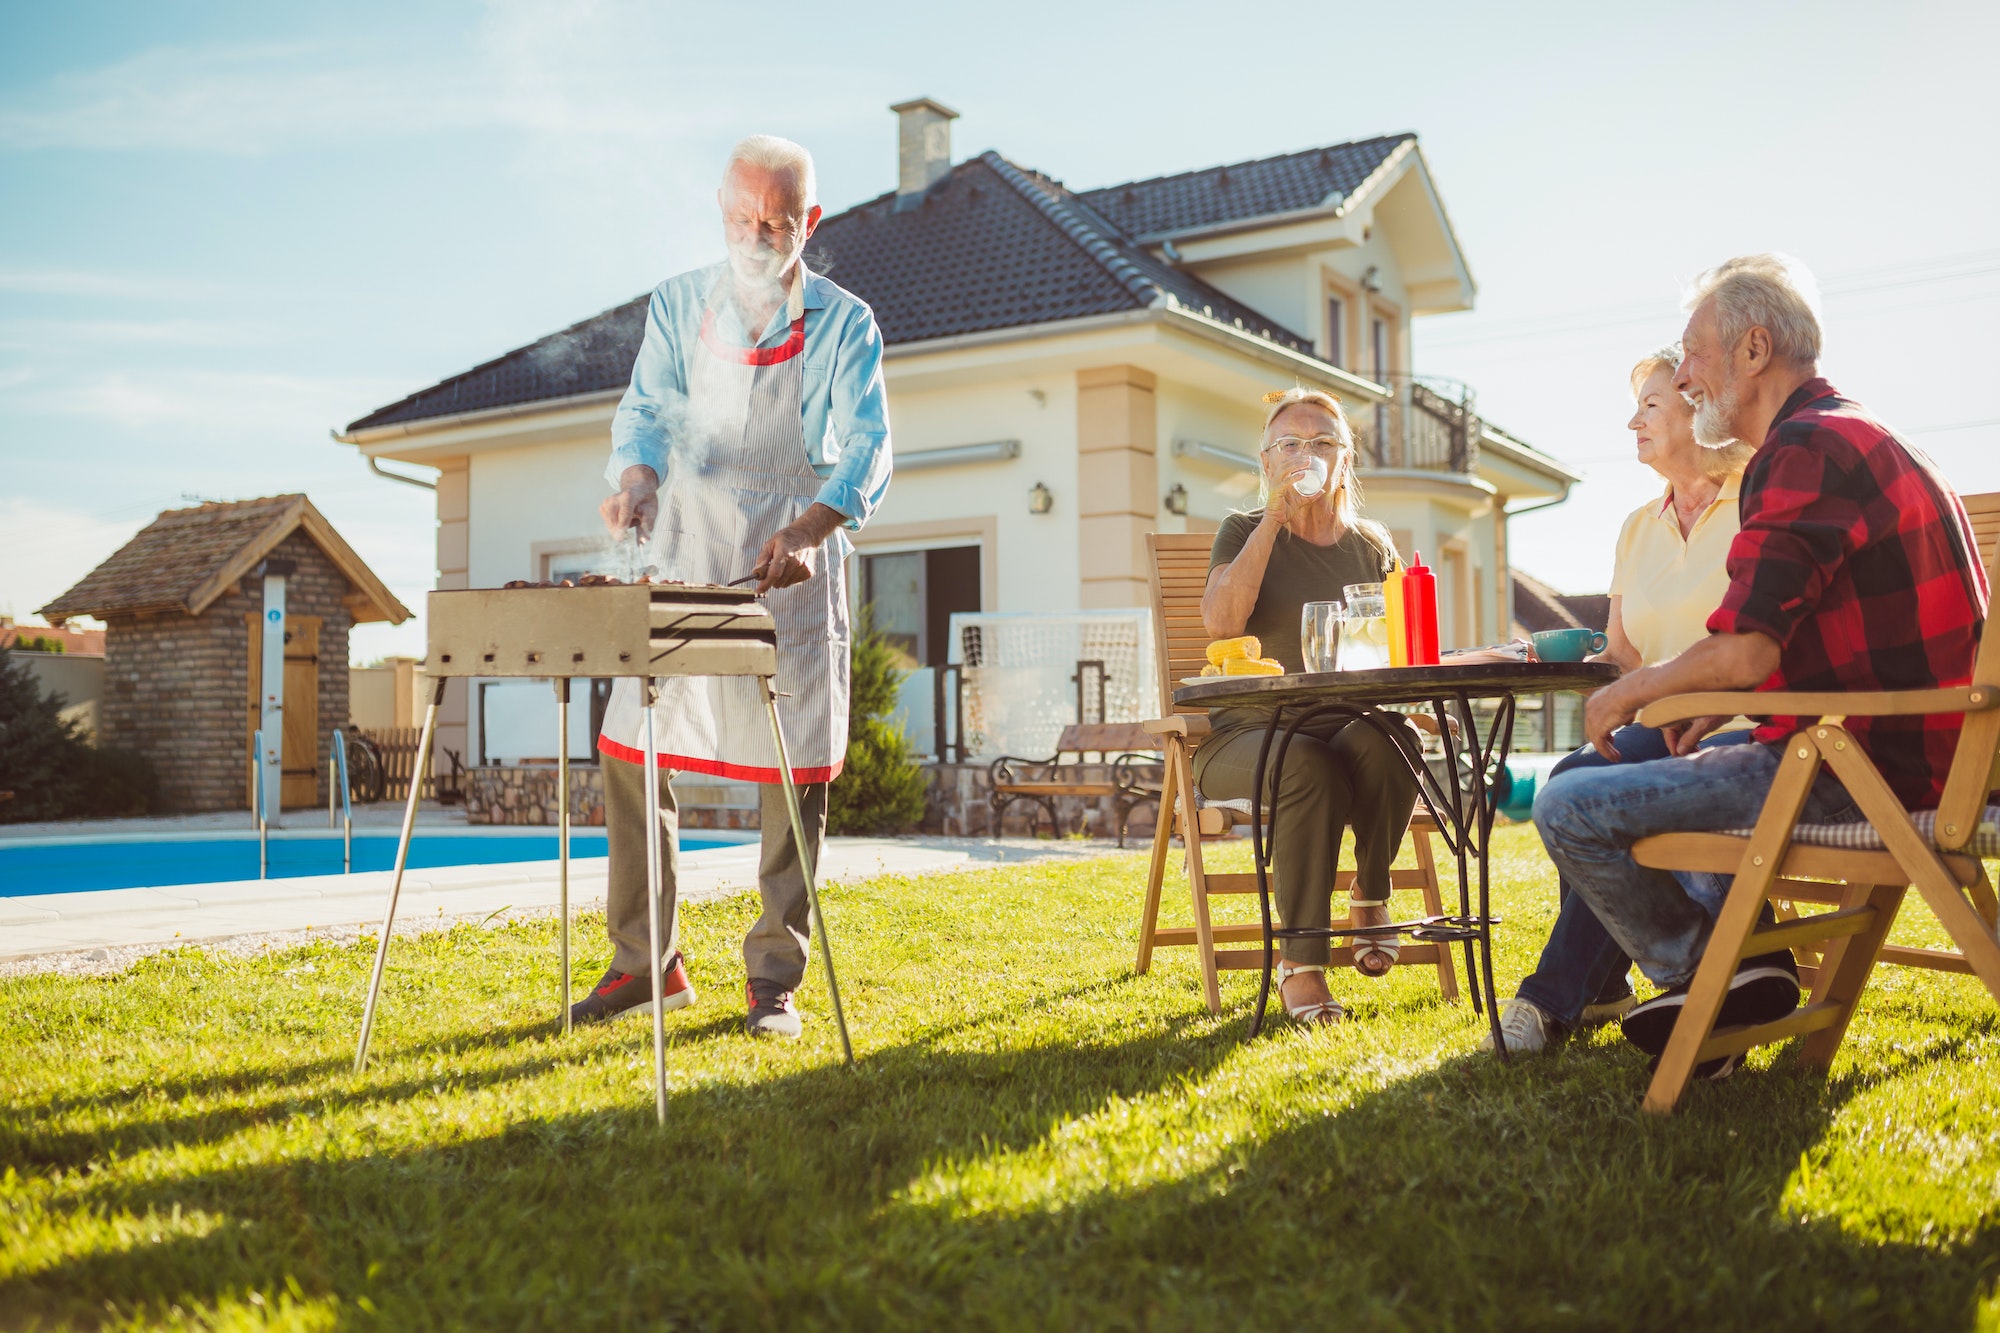 Senior neighbors having backyard barbecue party